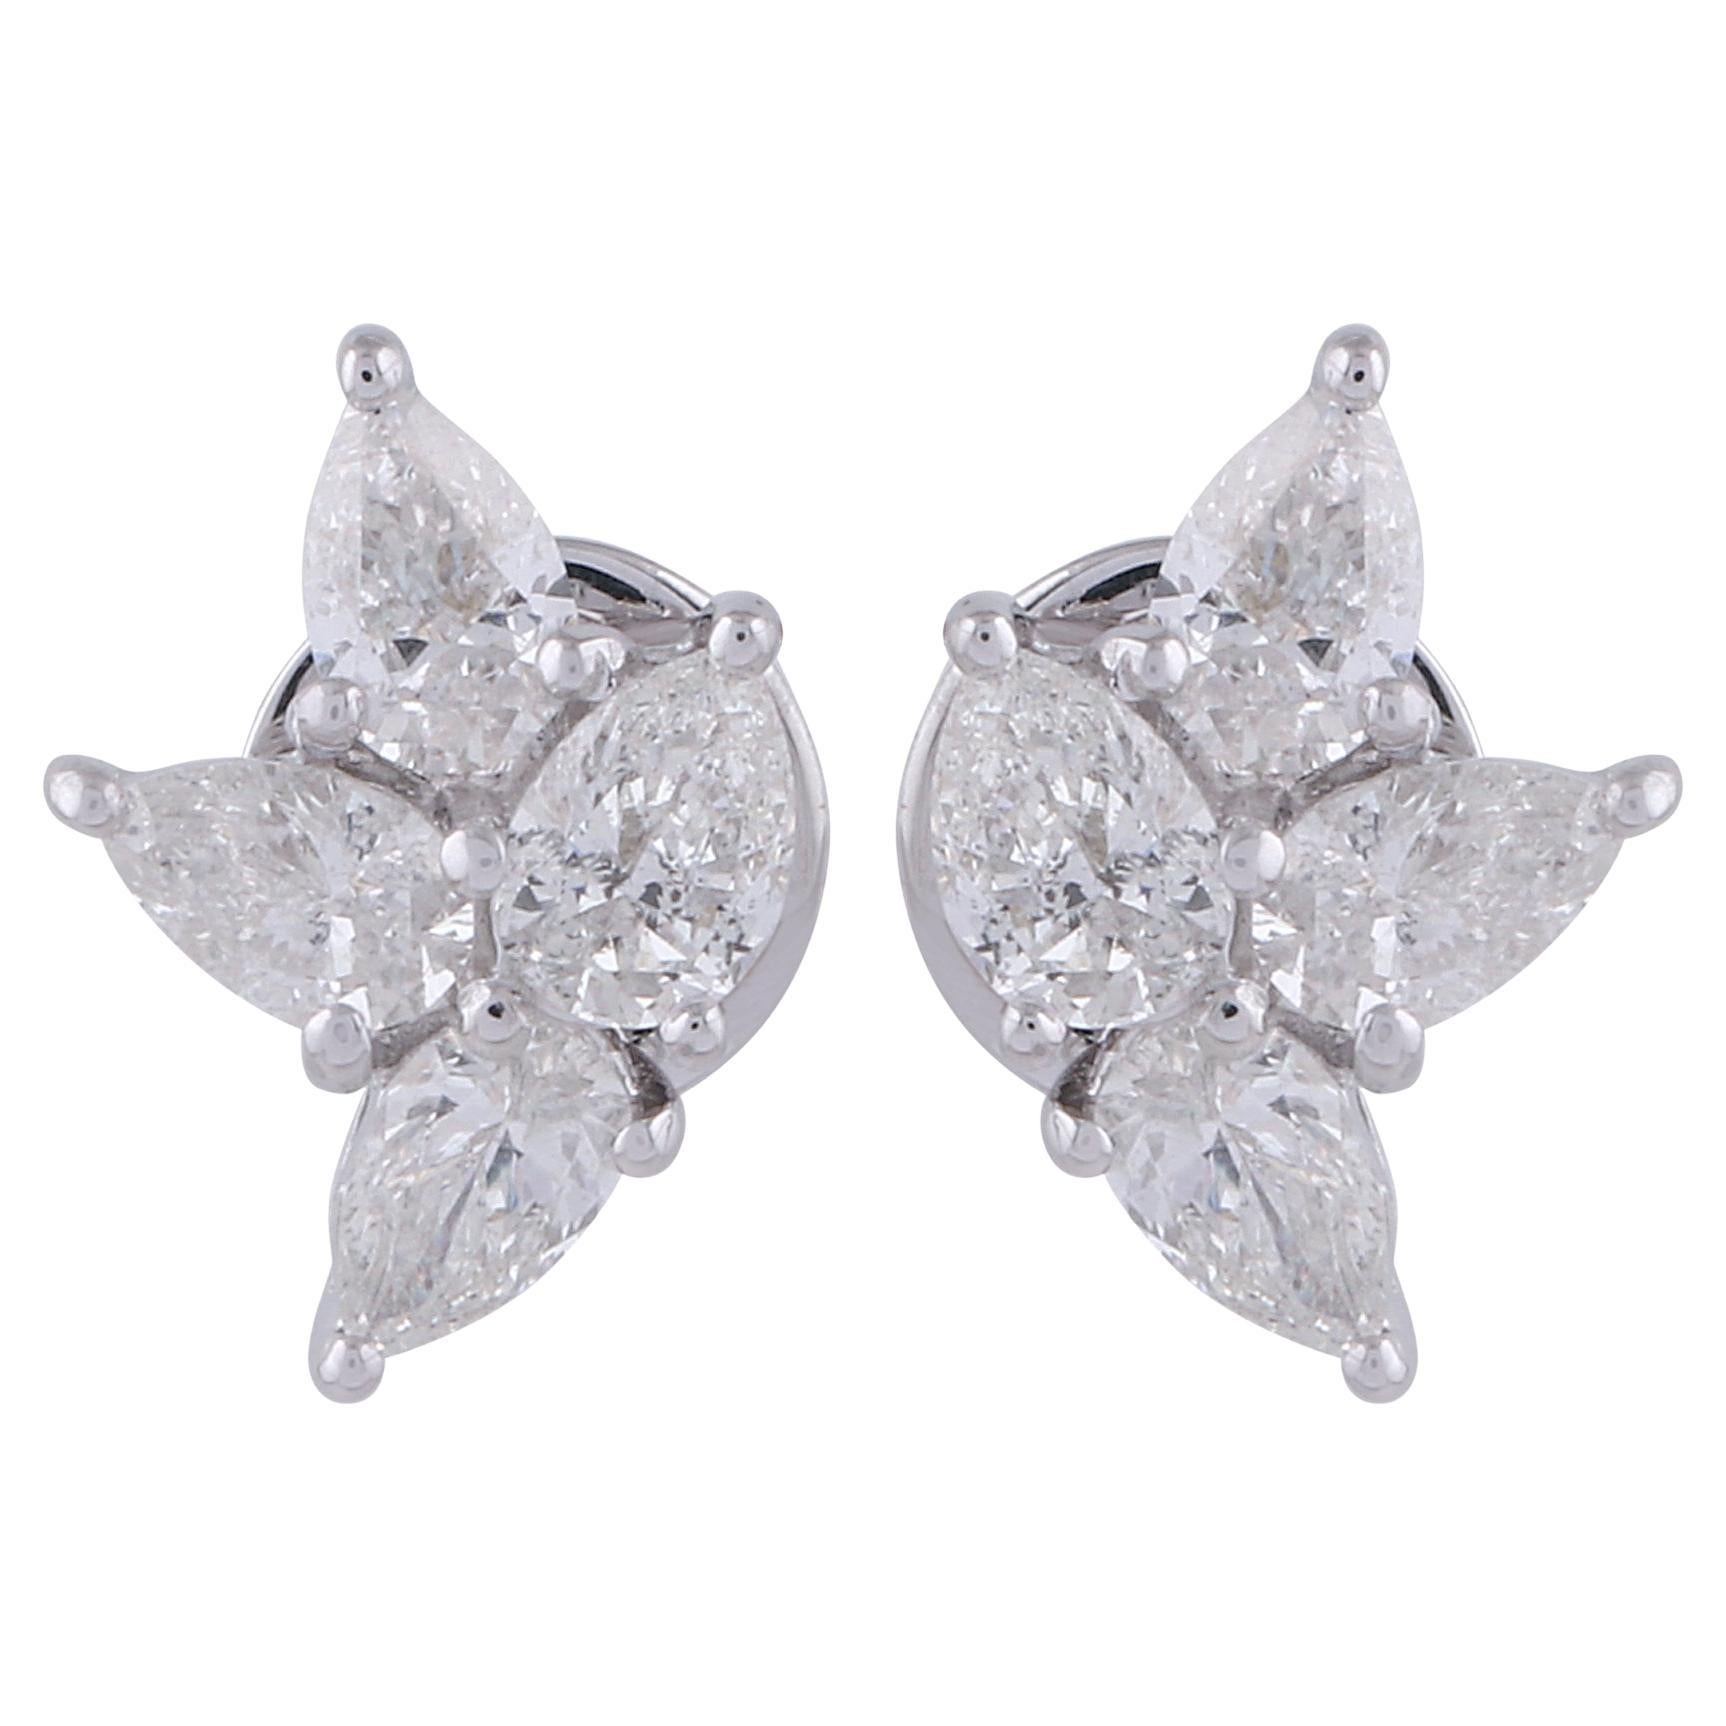 1.50 Carat SI Clarity HI Color Pear Diamond Stud Earrings 18 Karat White Gold